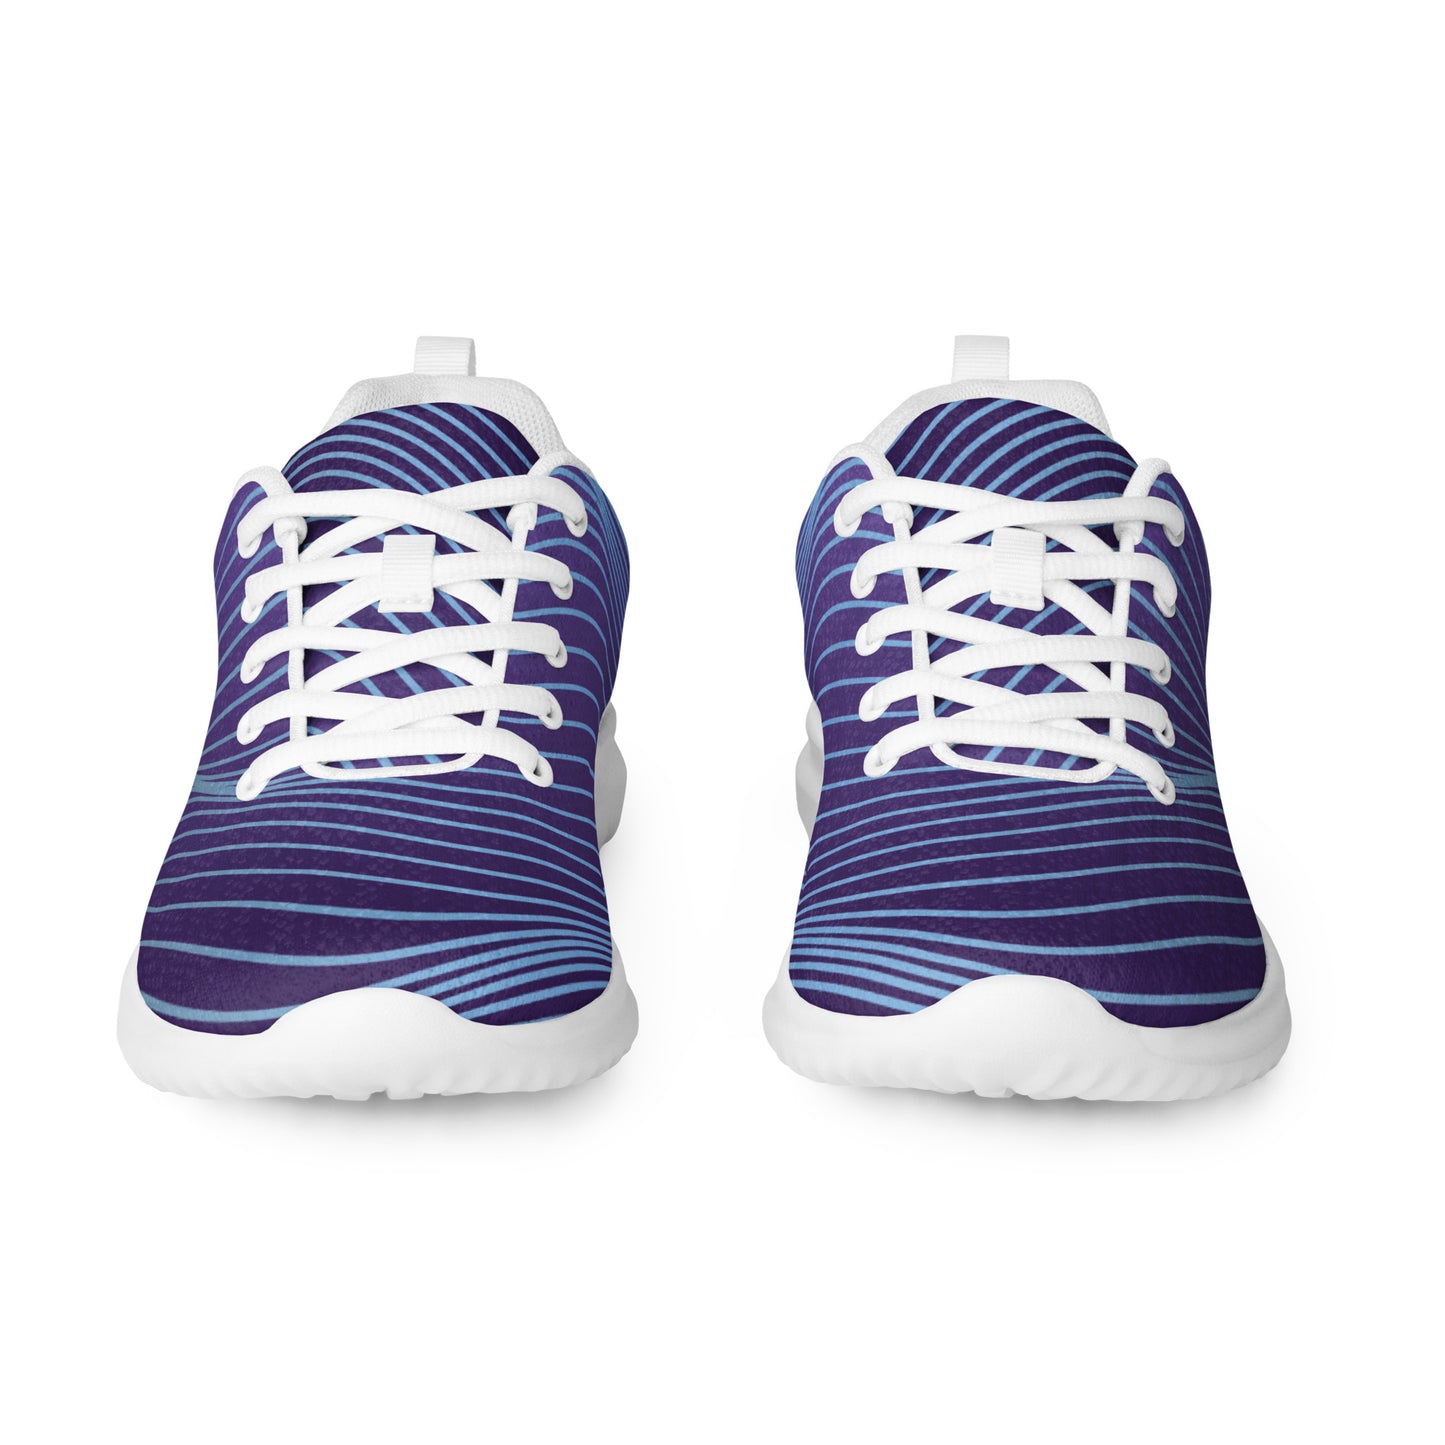 DASH Groovy Purple Men’s Athletic Shoes Lightweight Breathable Design by IOBI Original Apparel